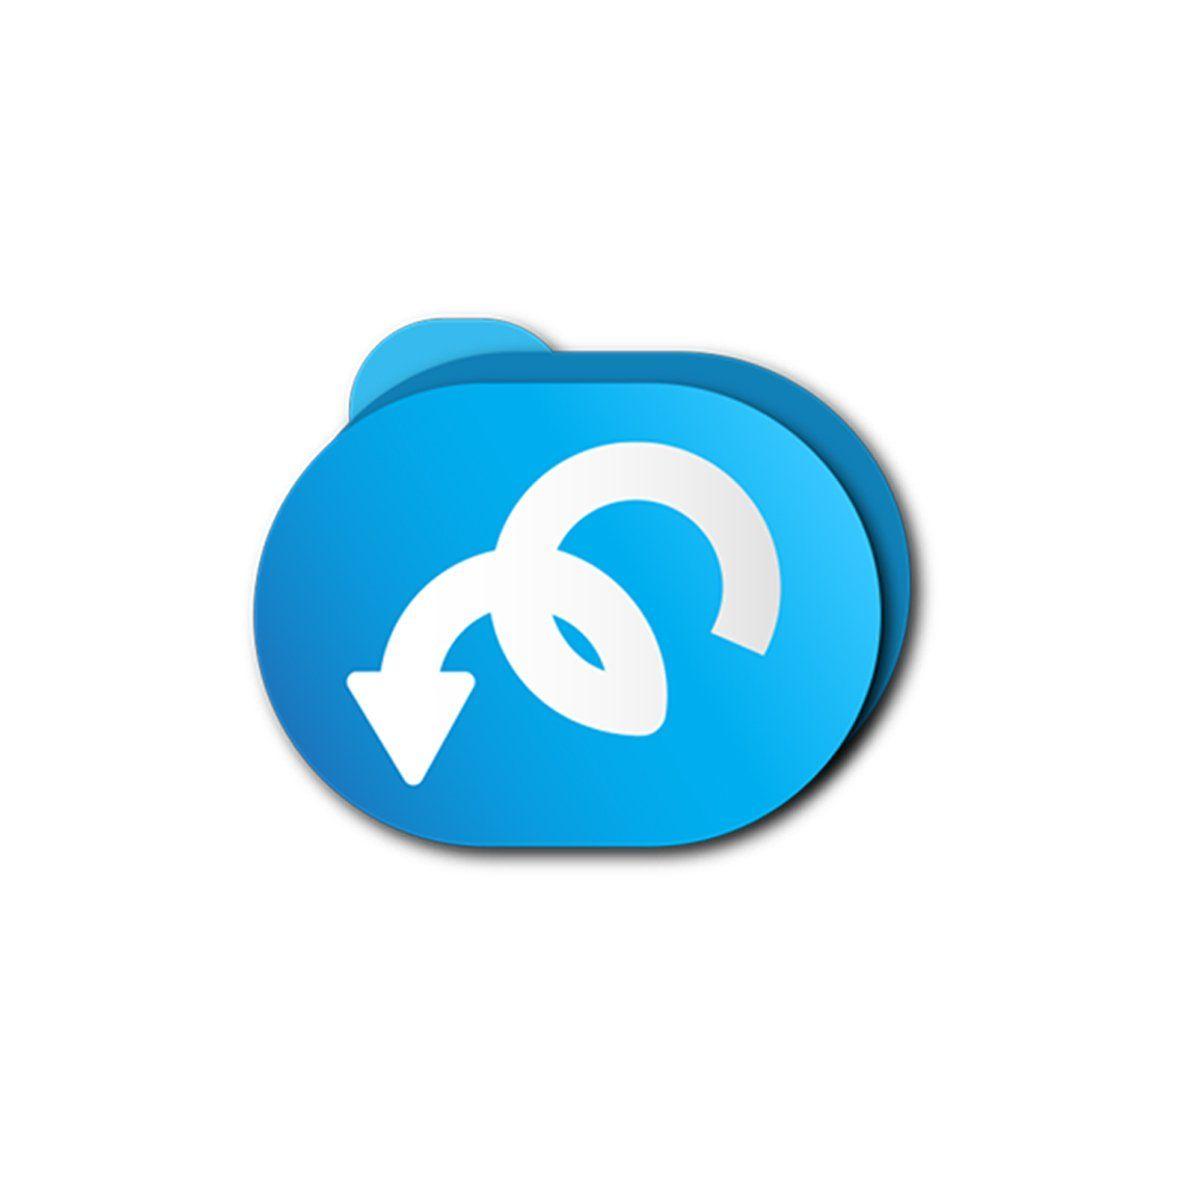 FrostWire Logo - My New Logo Design for FrostWire Torrent app.